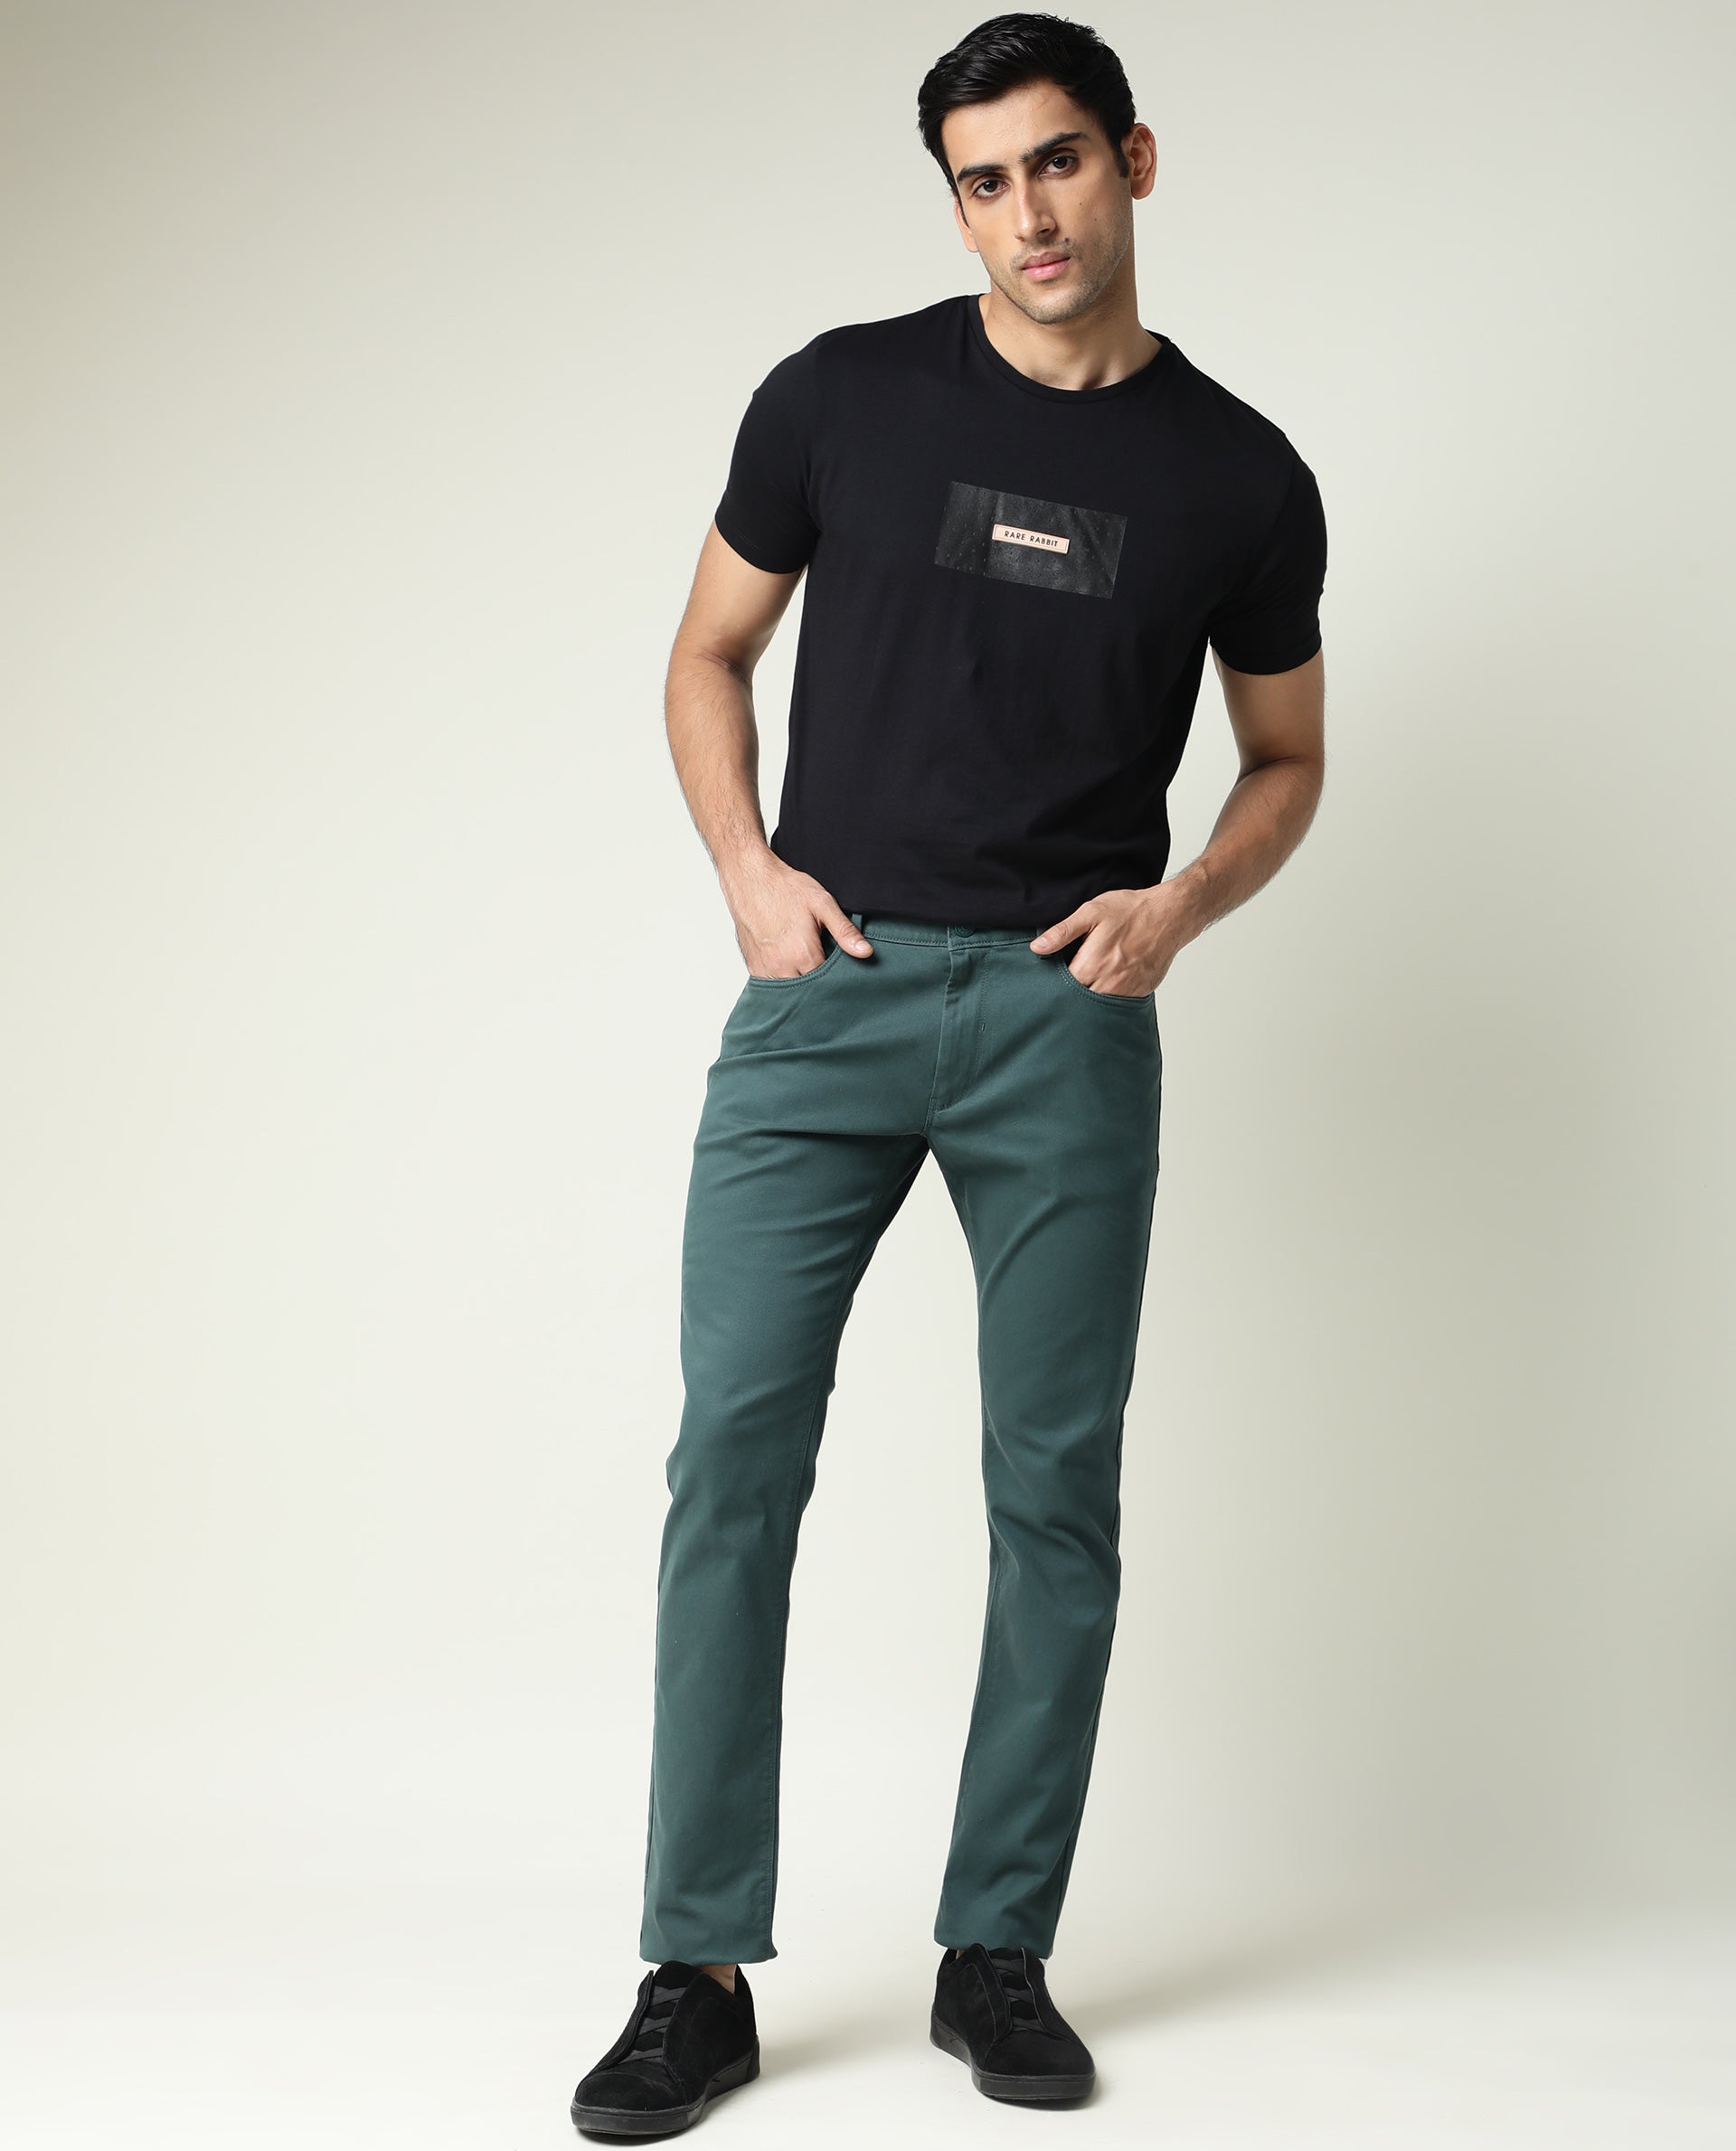 Buy Green Trousers for Men